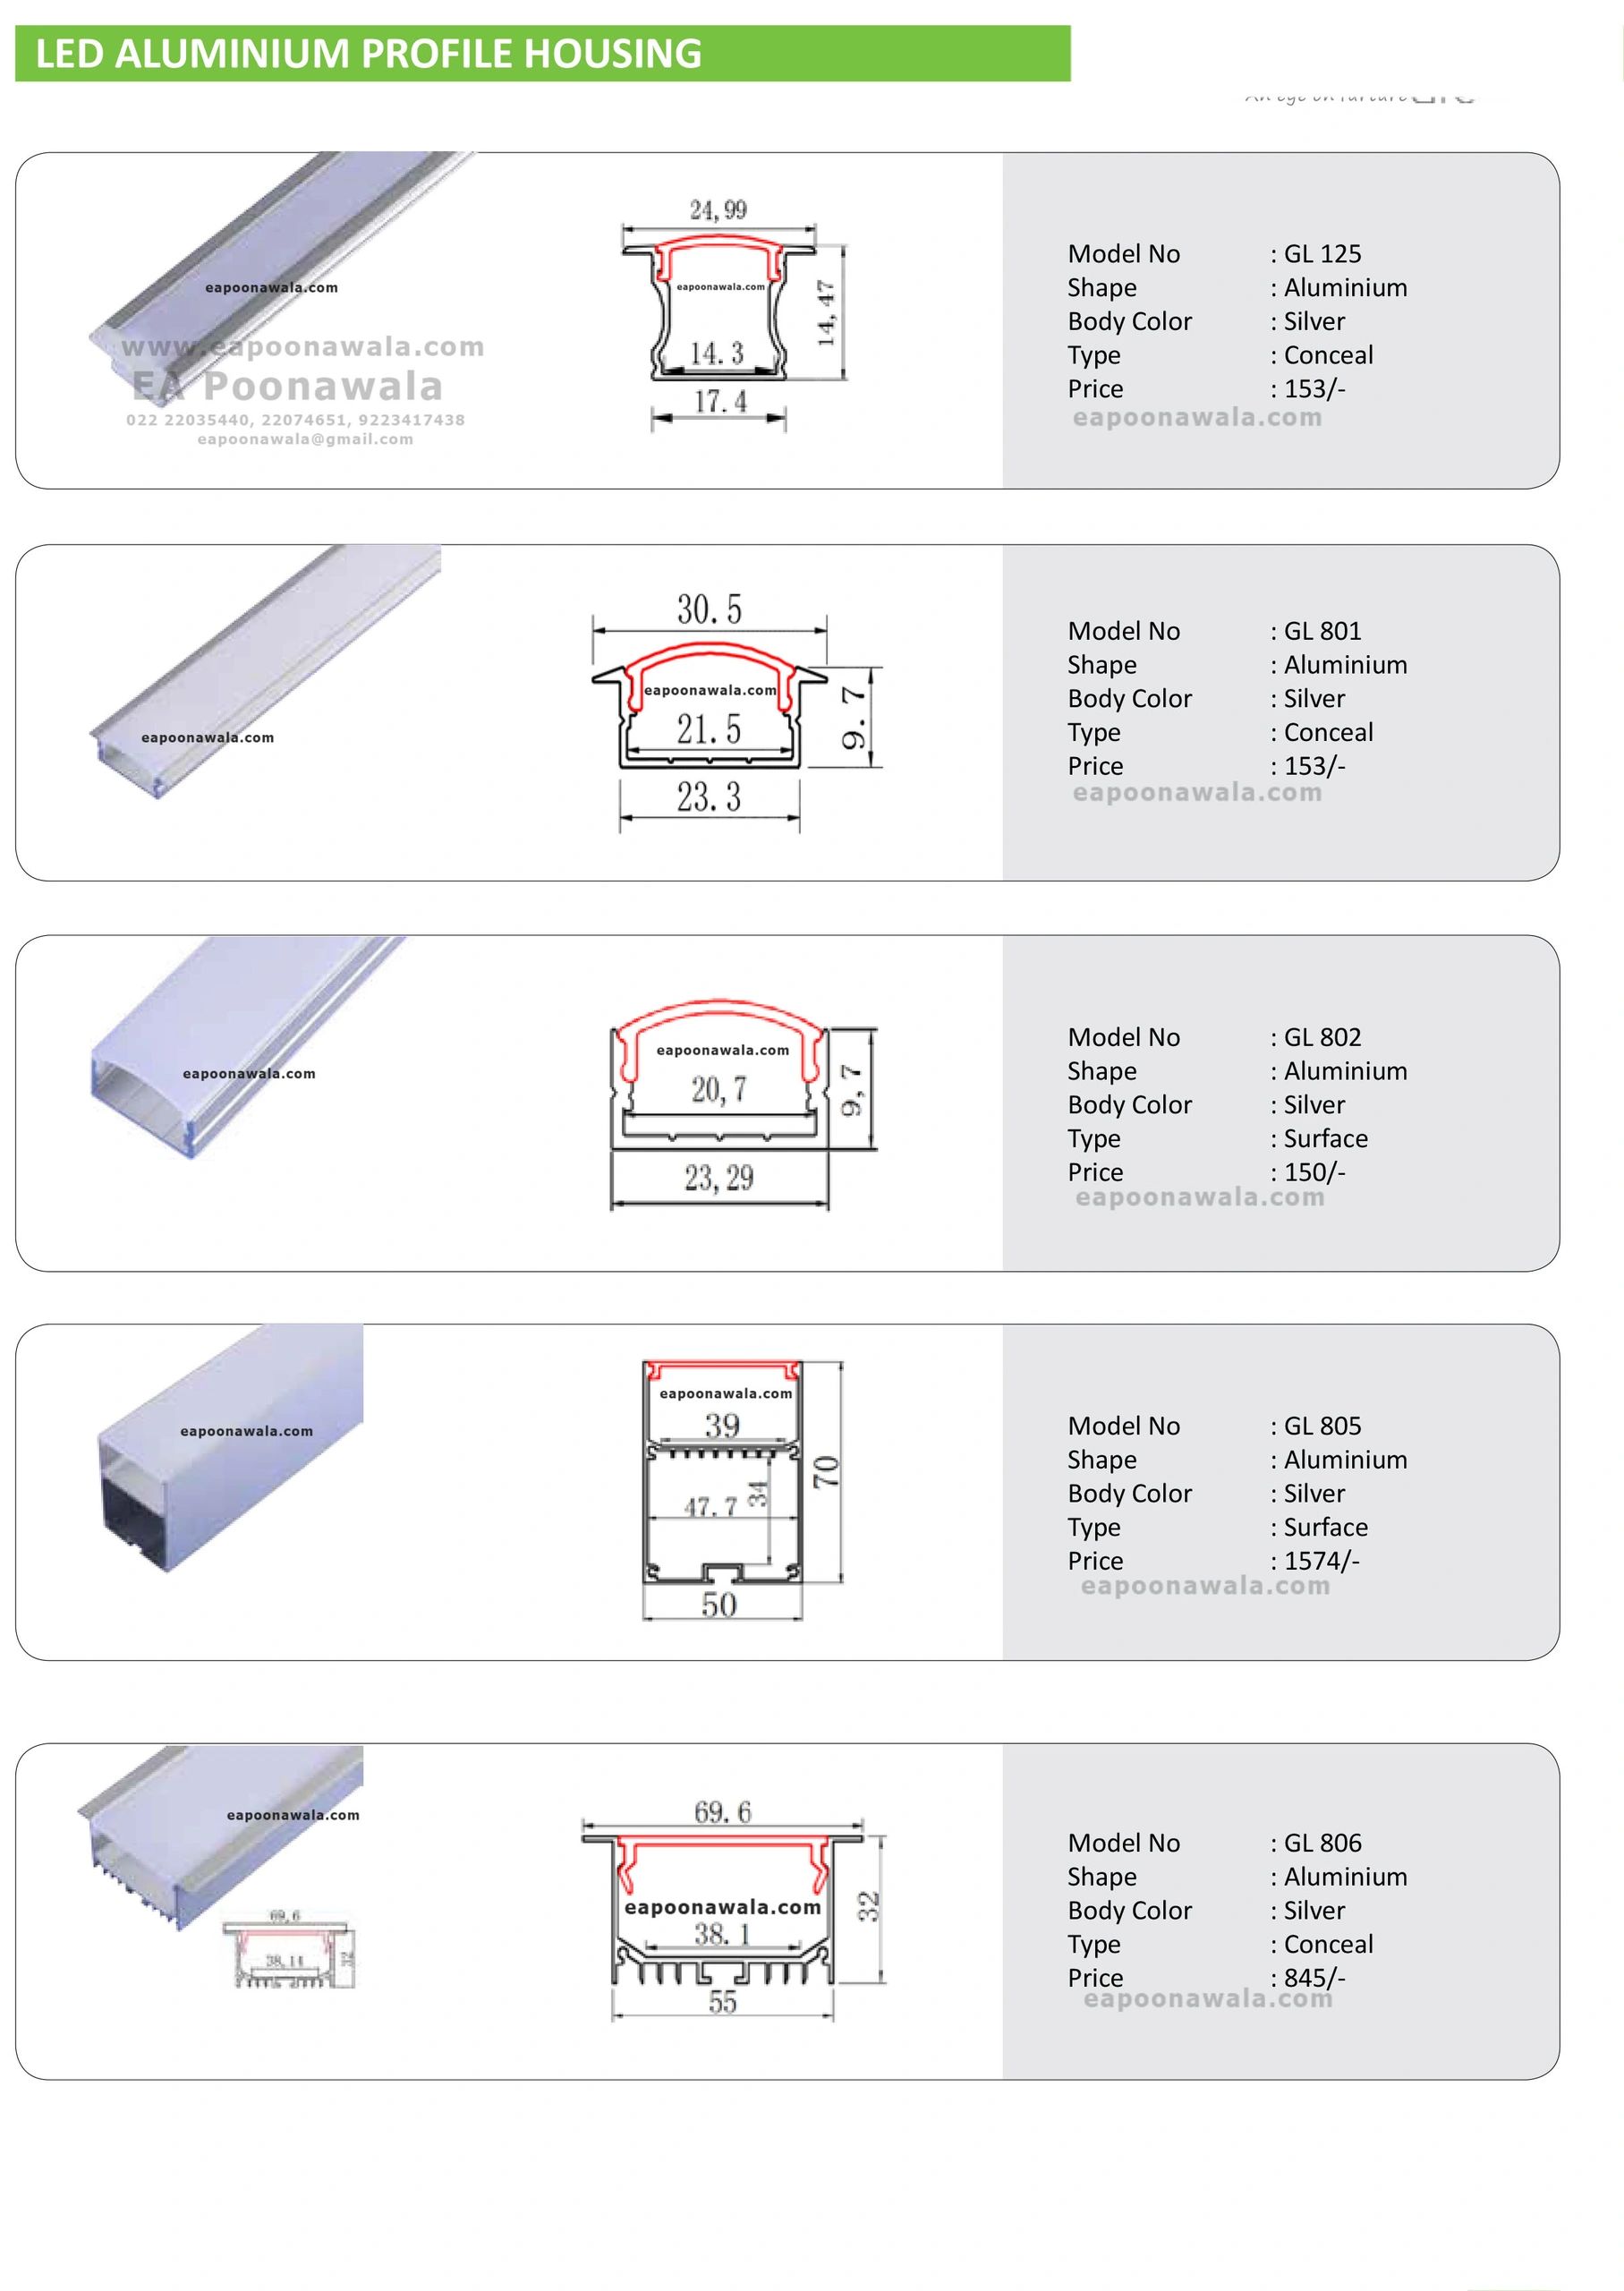 Aluminum Profile Housing for LED by EA Poonawala